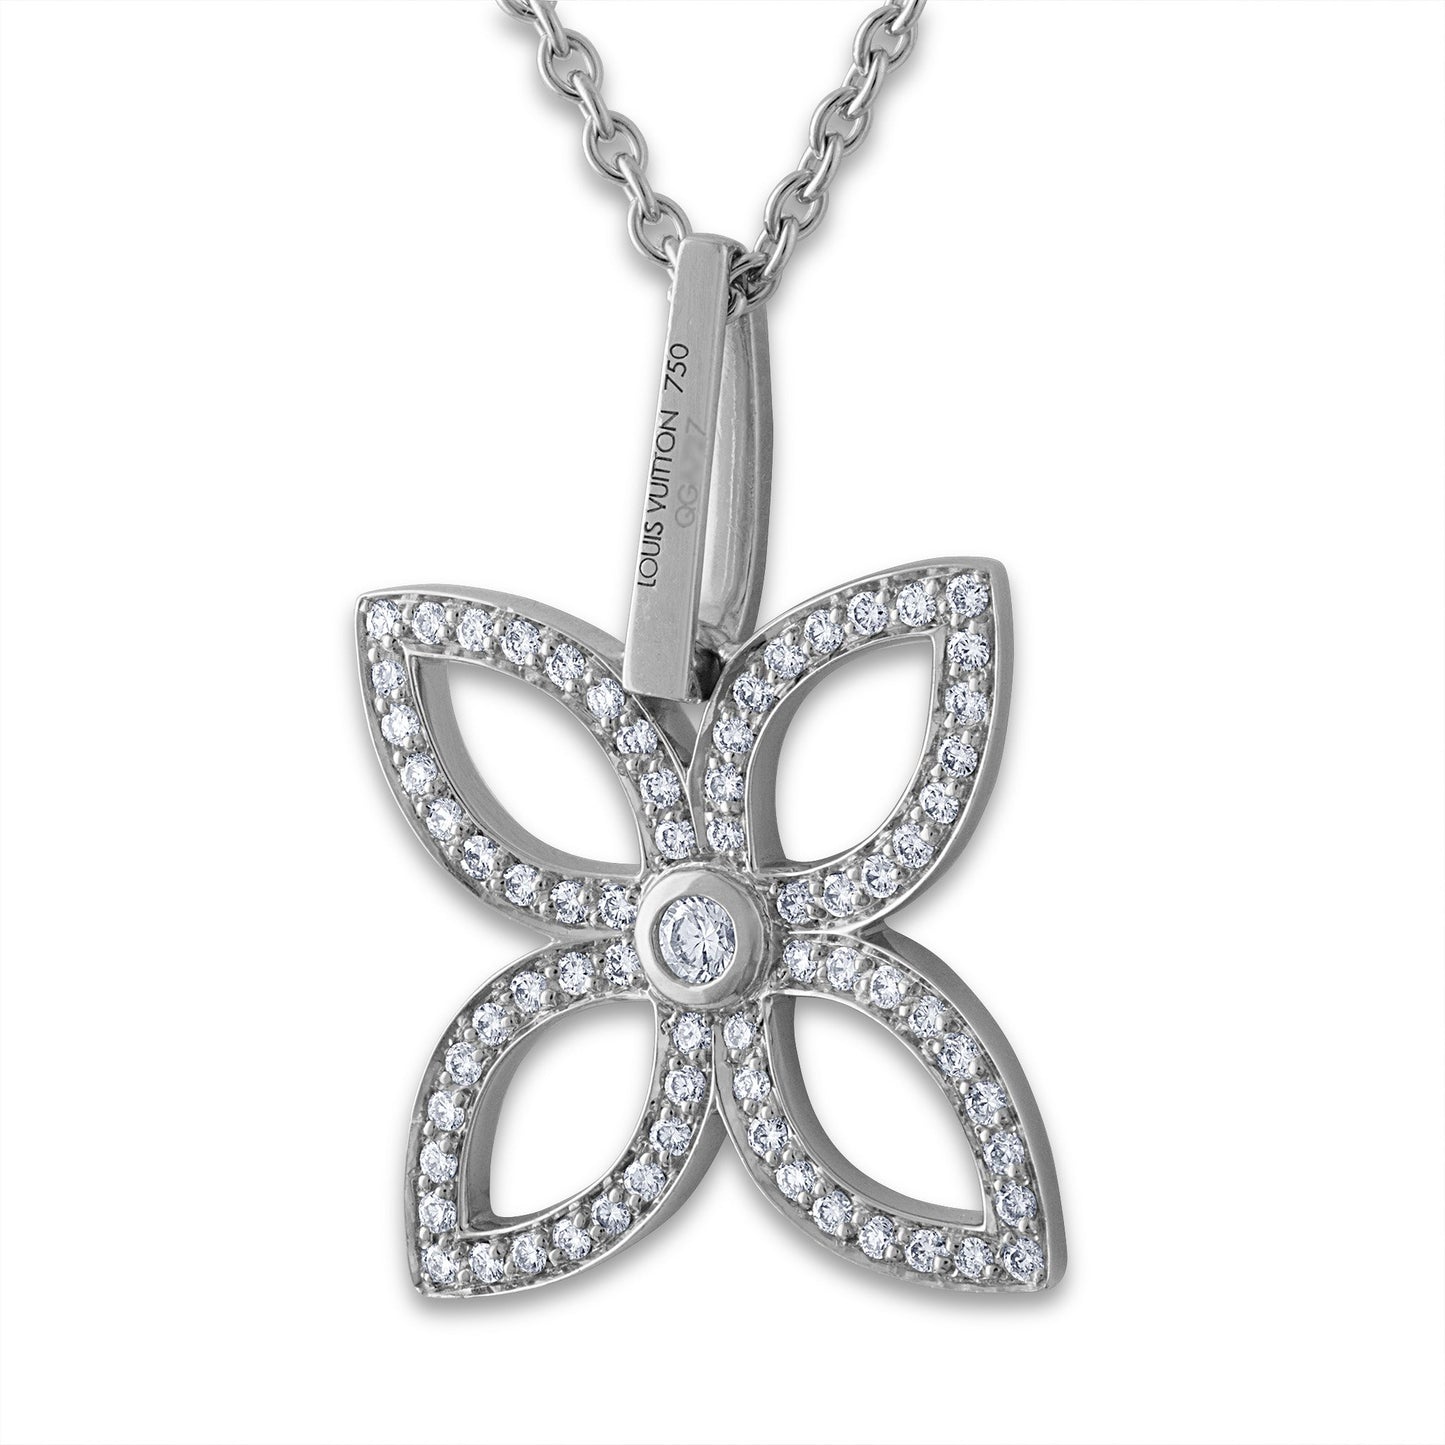 Louis Vuitton 18K White Gold Flower Diamond Necklace Length: 18"